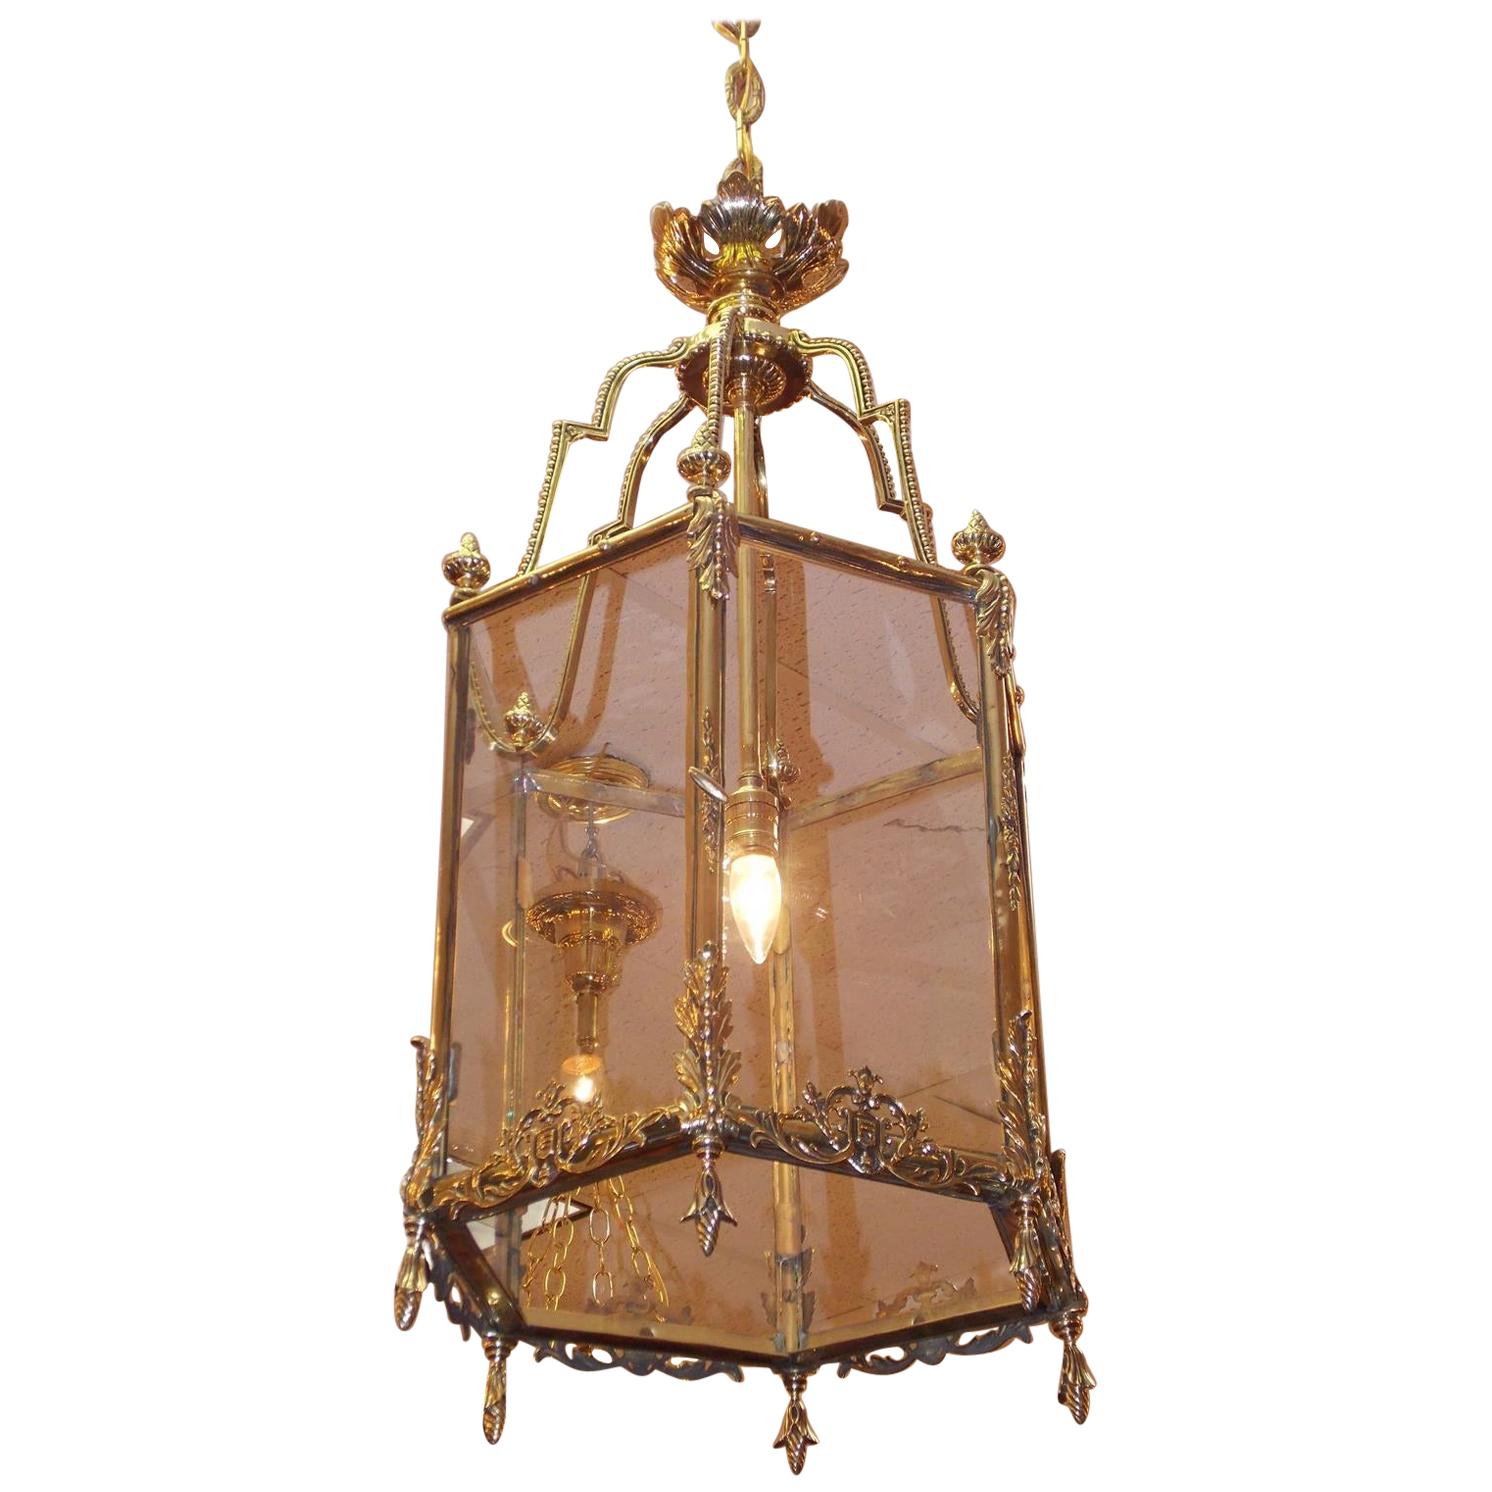 English Brass Hanging Beaded Hall Glass Lantern with Interior Light, Circa 1800